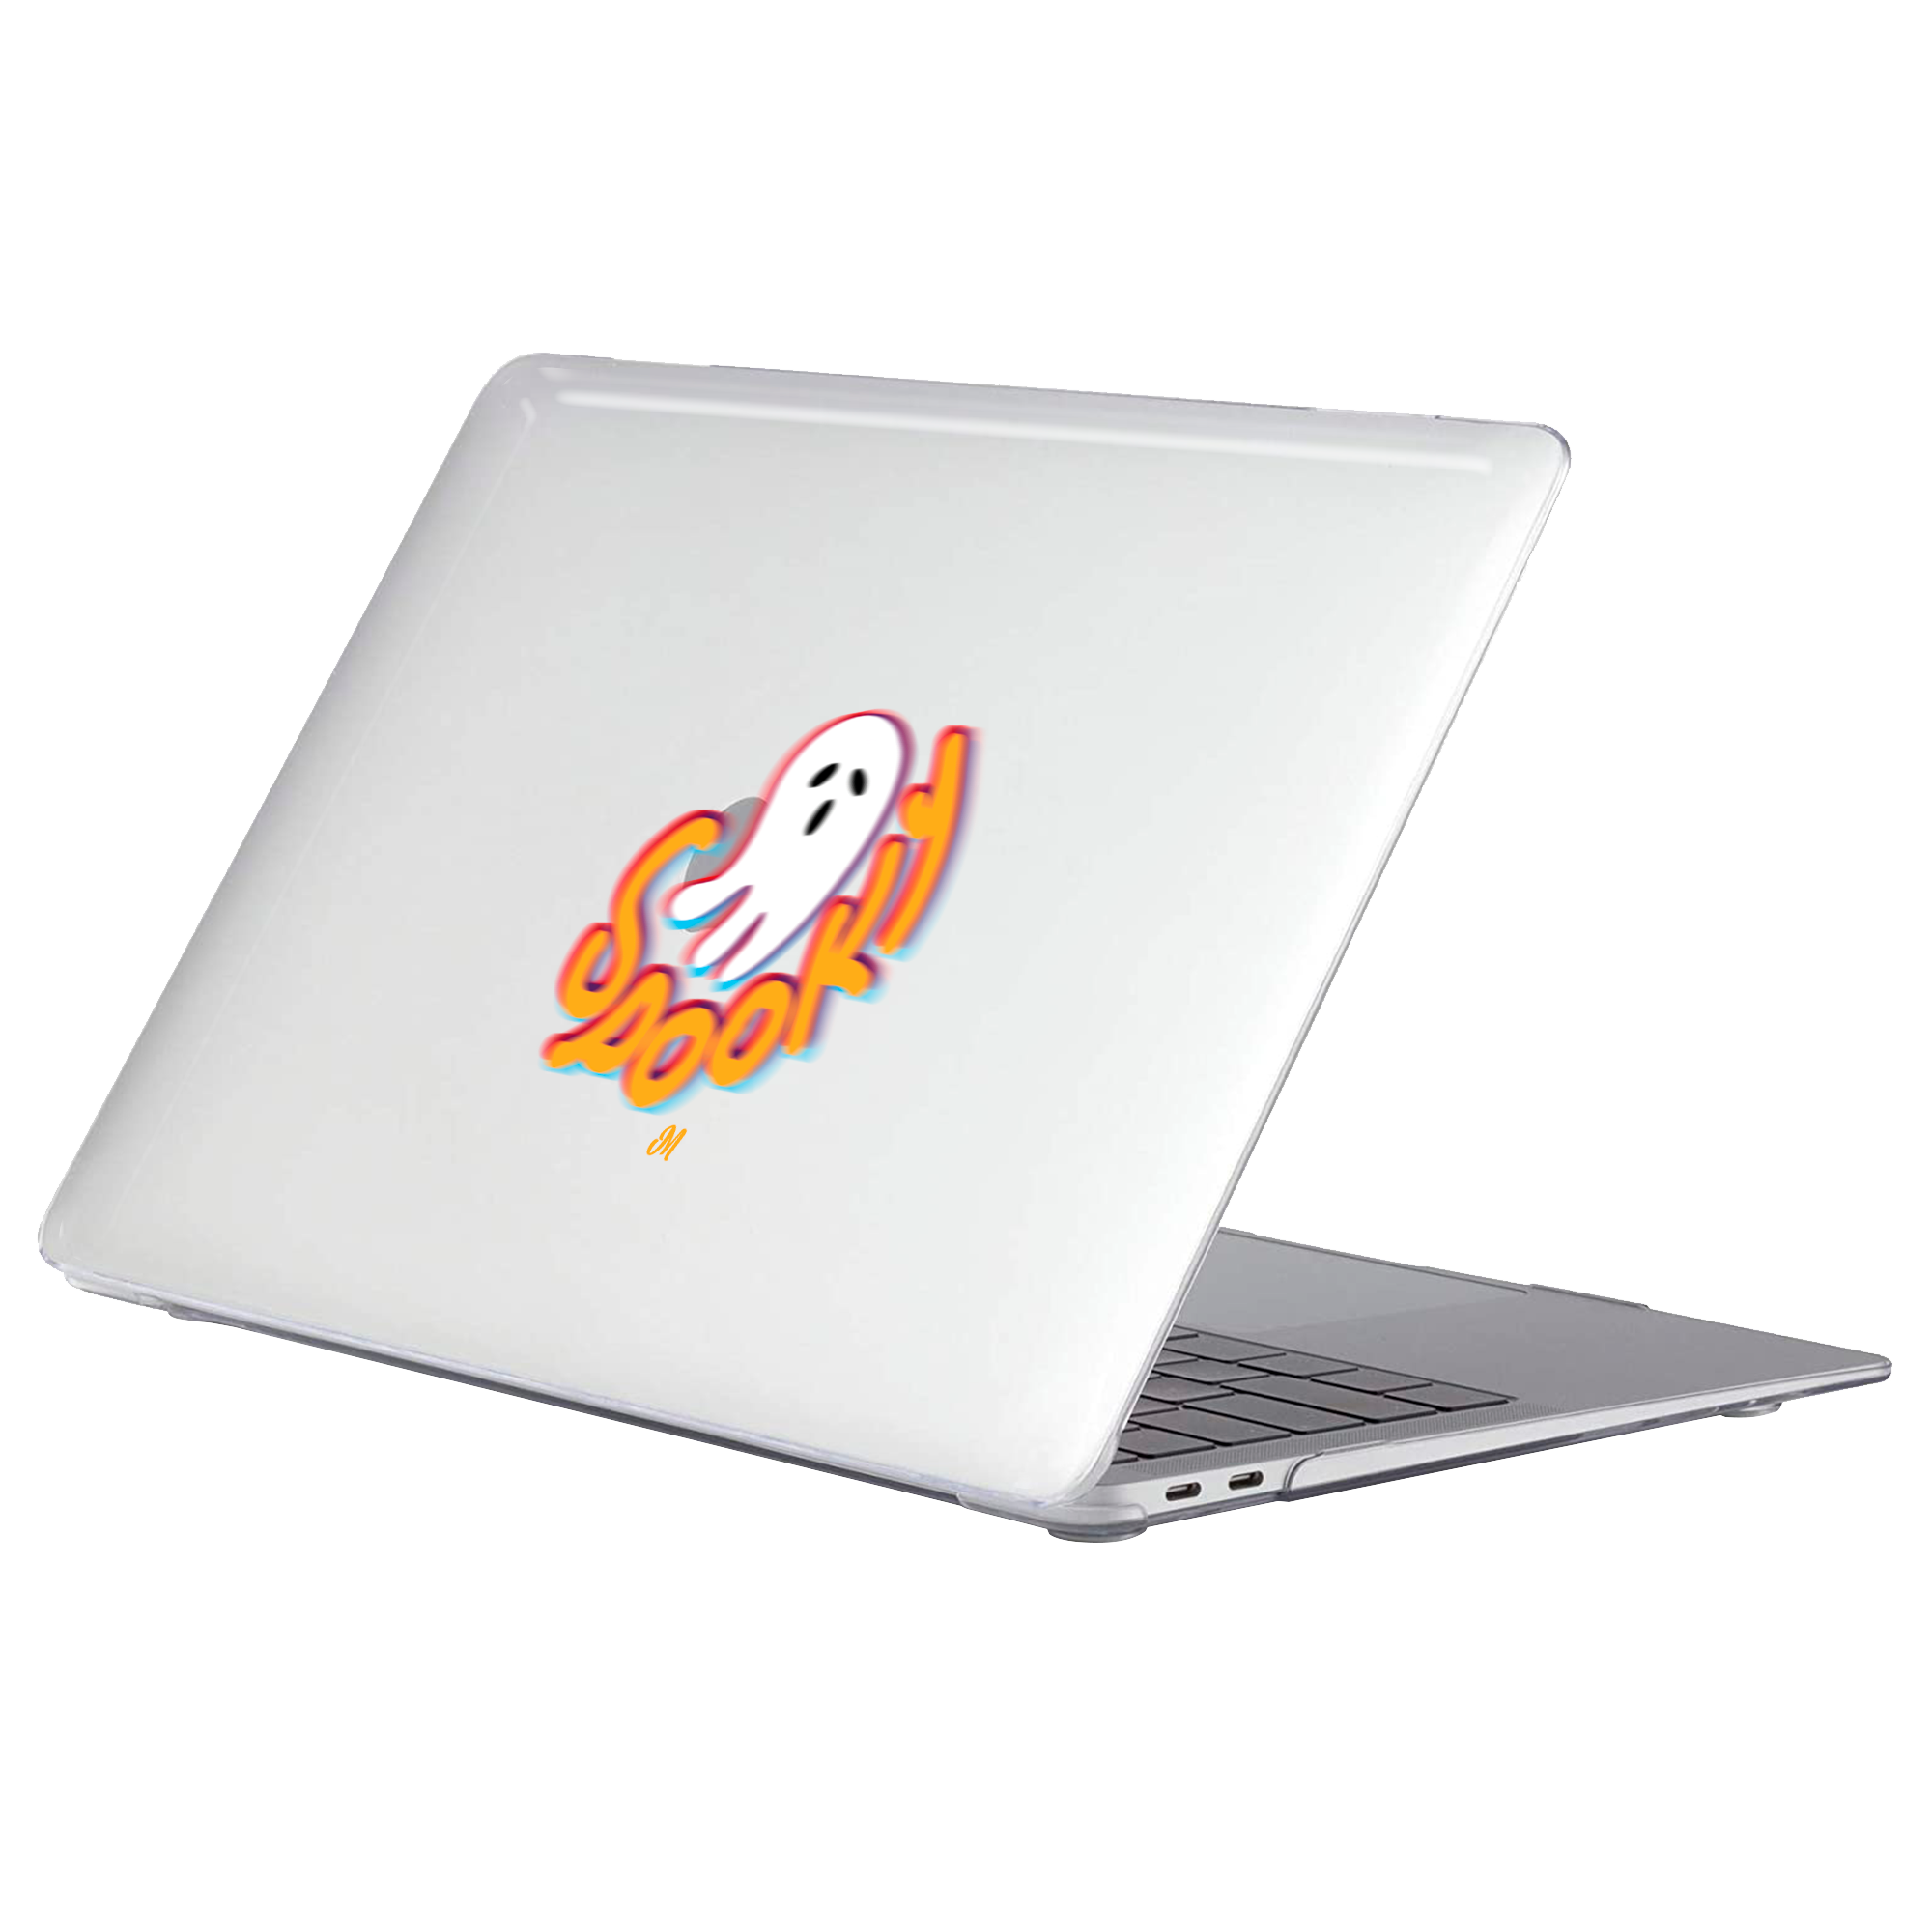 Spooky Boo MacBook Case - Mandala Cases